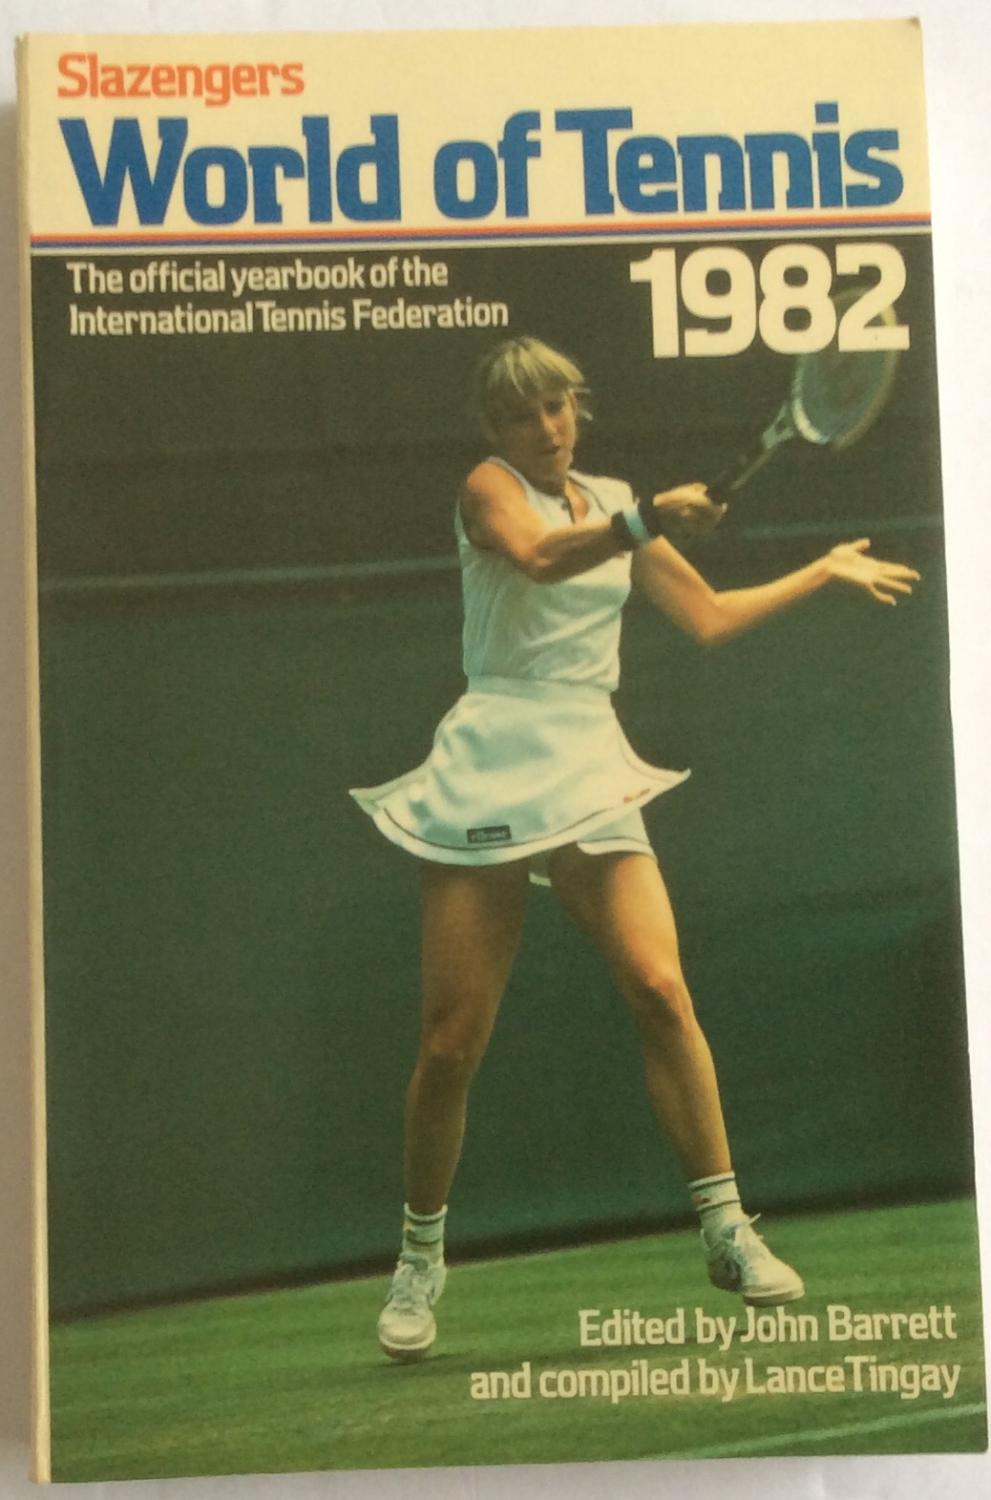 Slazengers World of Tennis 1982: the Official Yearbook of the International Tennis Federation - John Barrett & Lance Tingay (Ed's.)